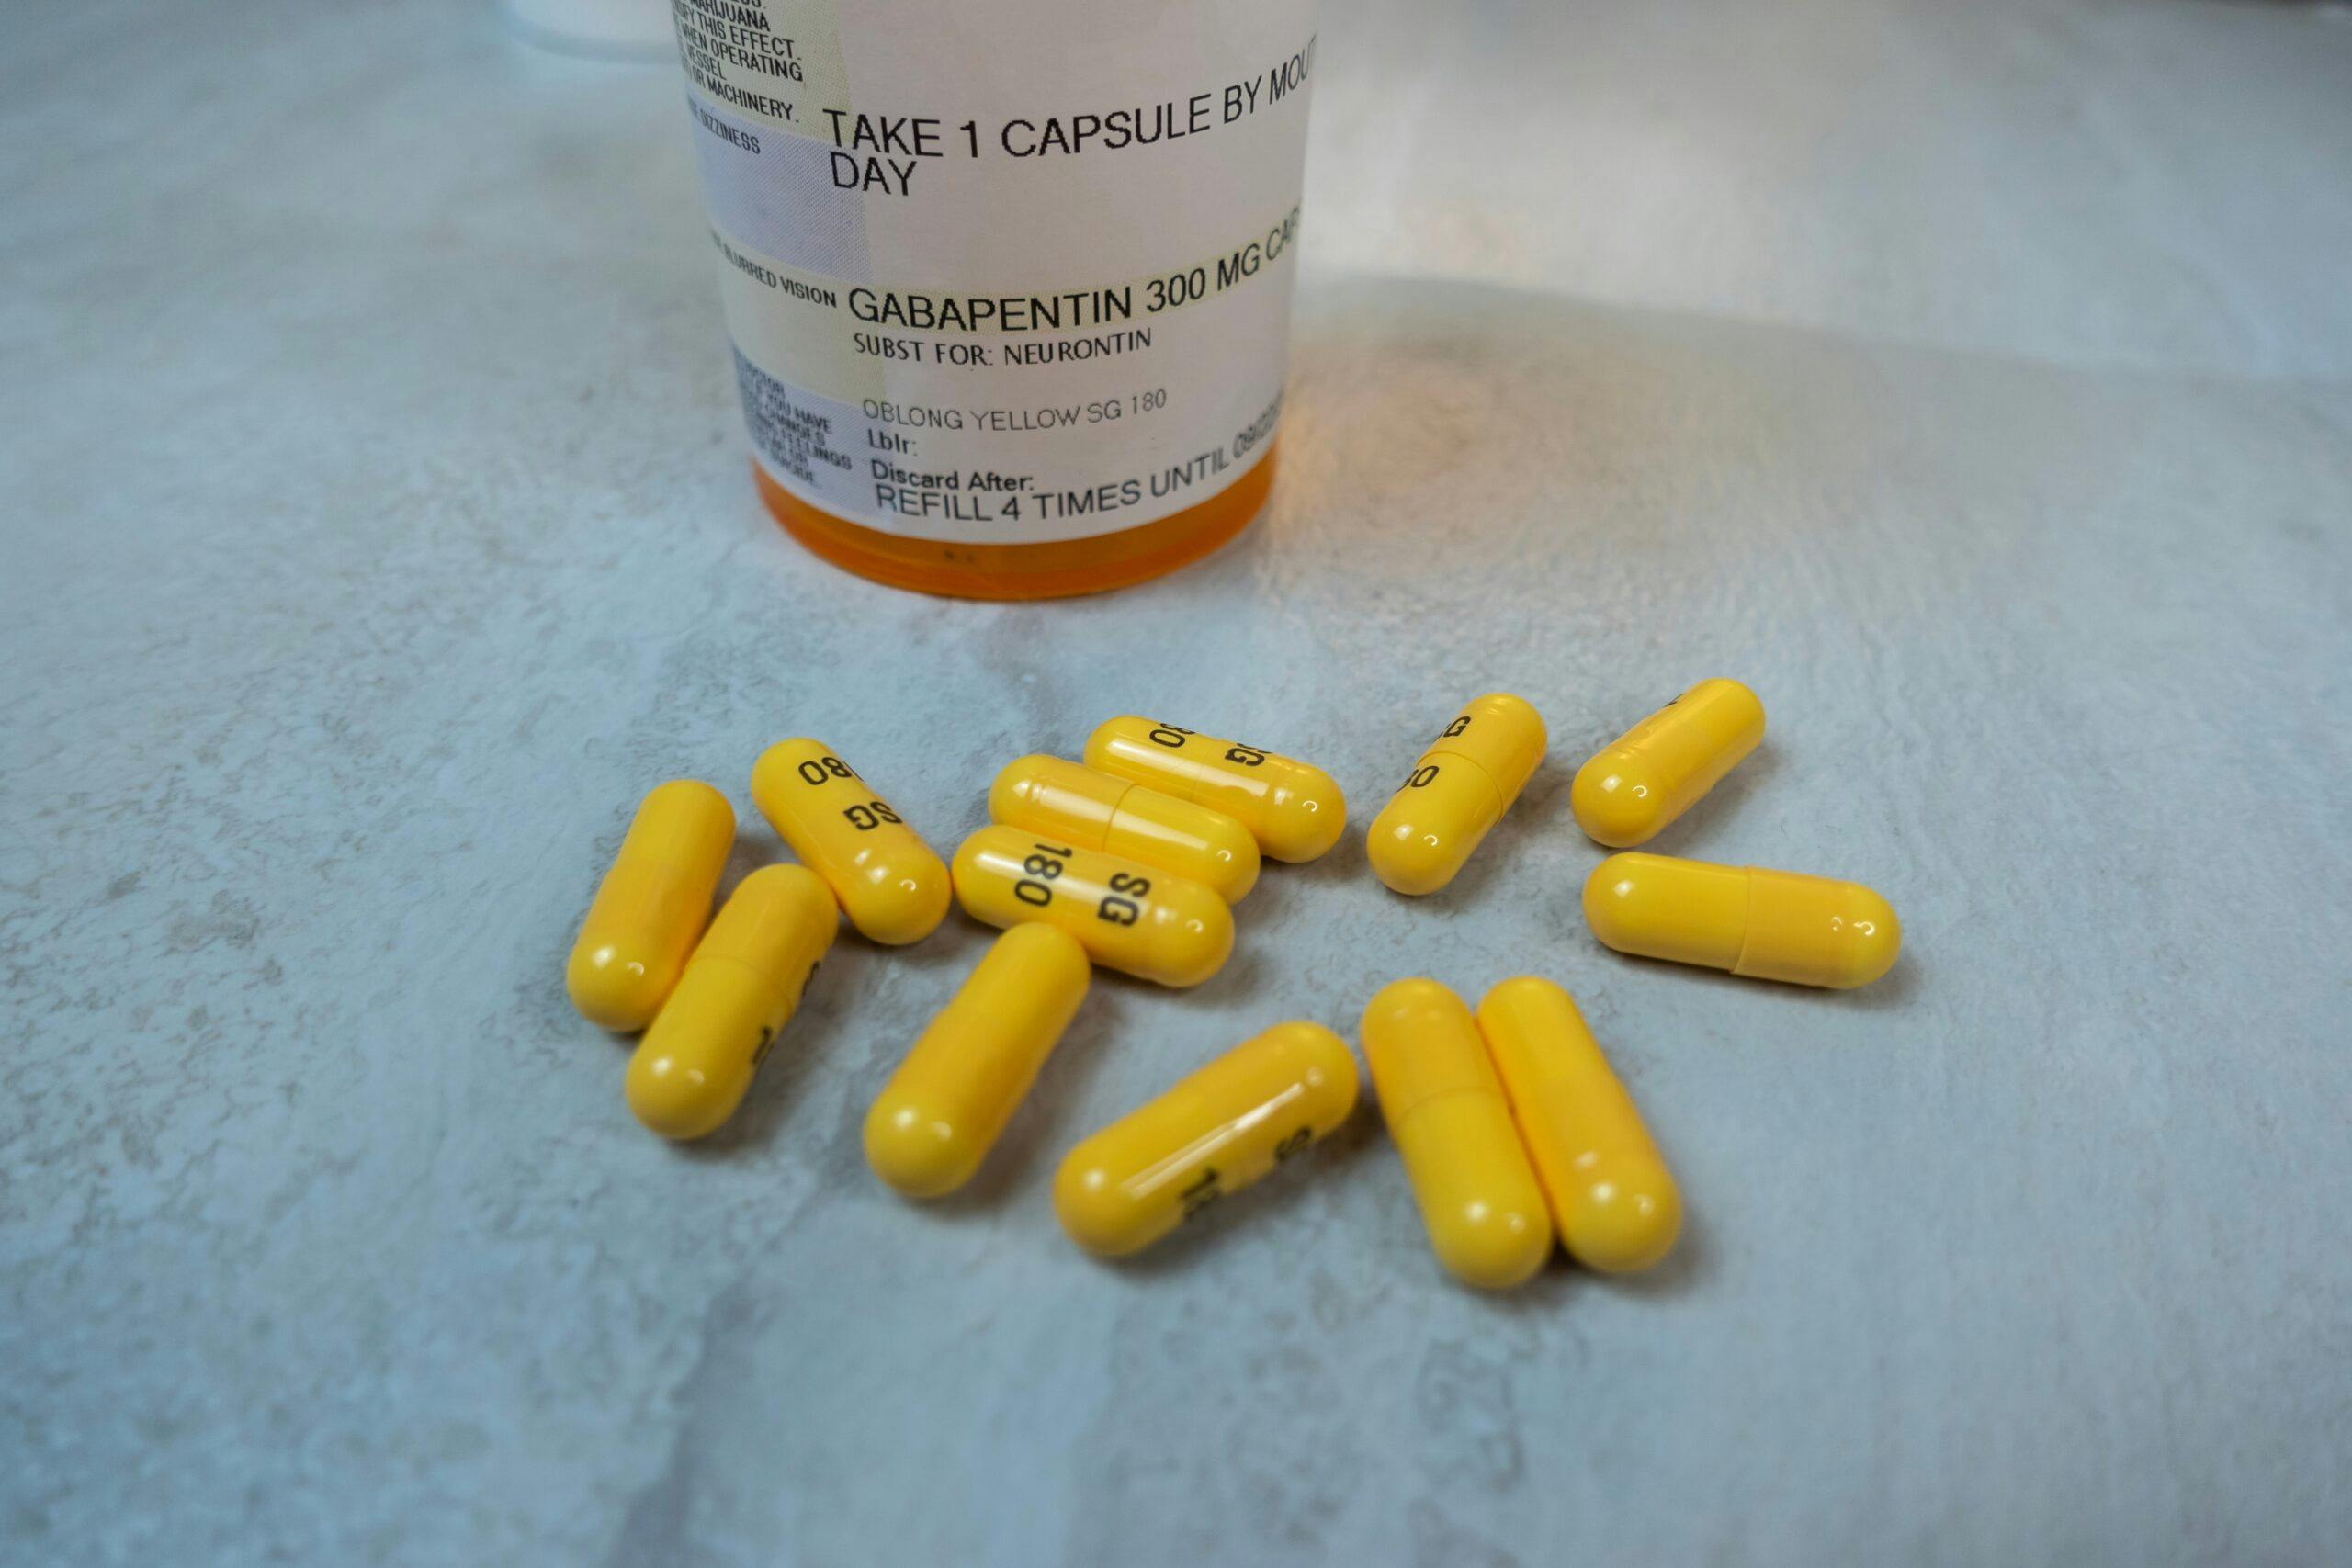 gabapentin pills and rx bottle